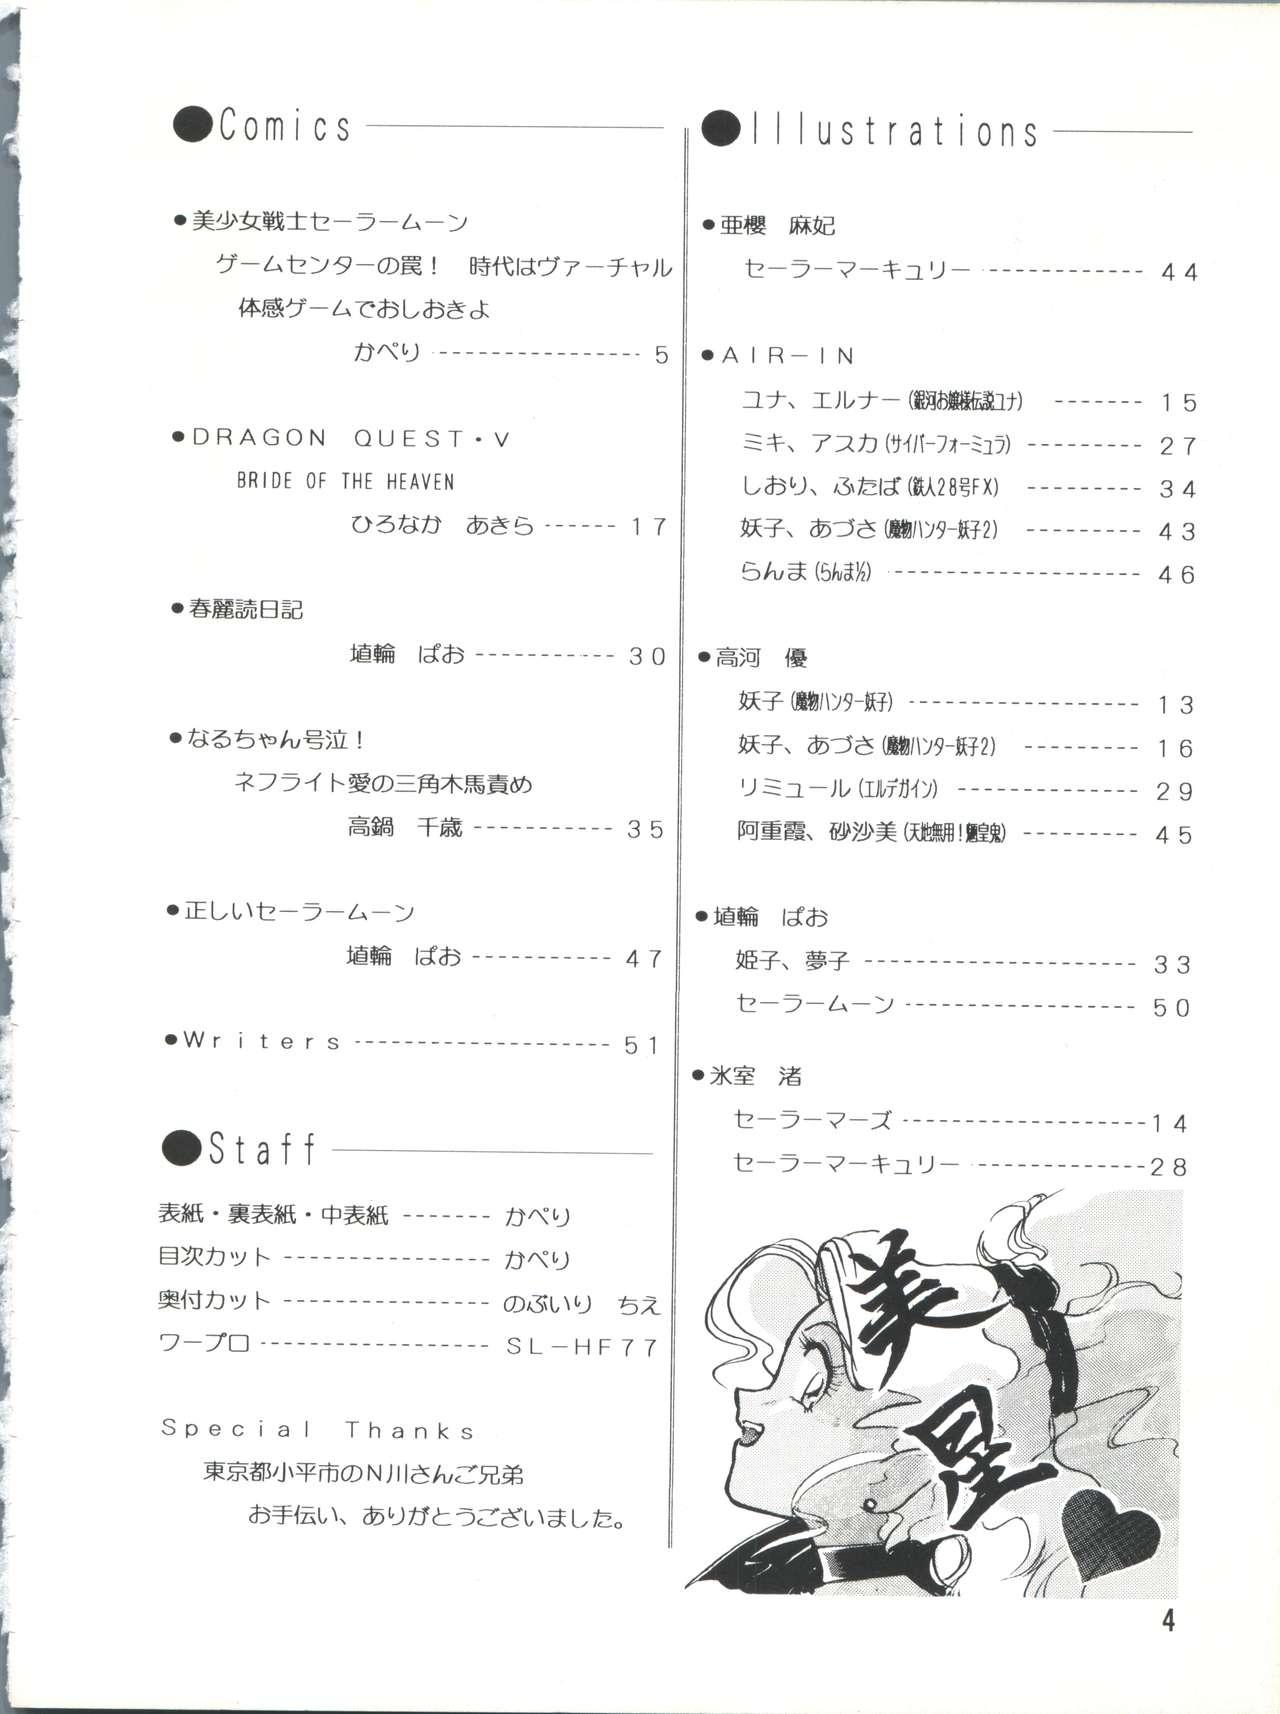 Webcamshow PLUS-Y Vol.10 - Sailor moon Dragon quest v Free Blow Job - Page 4